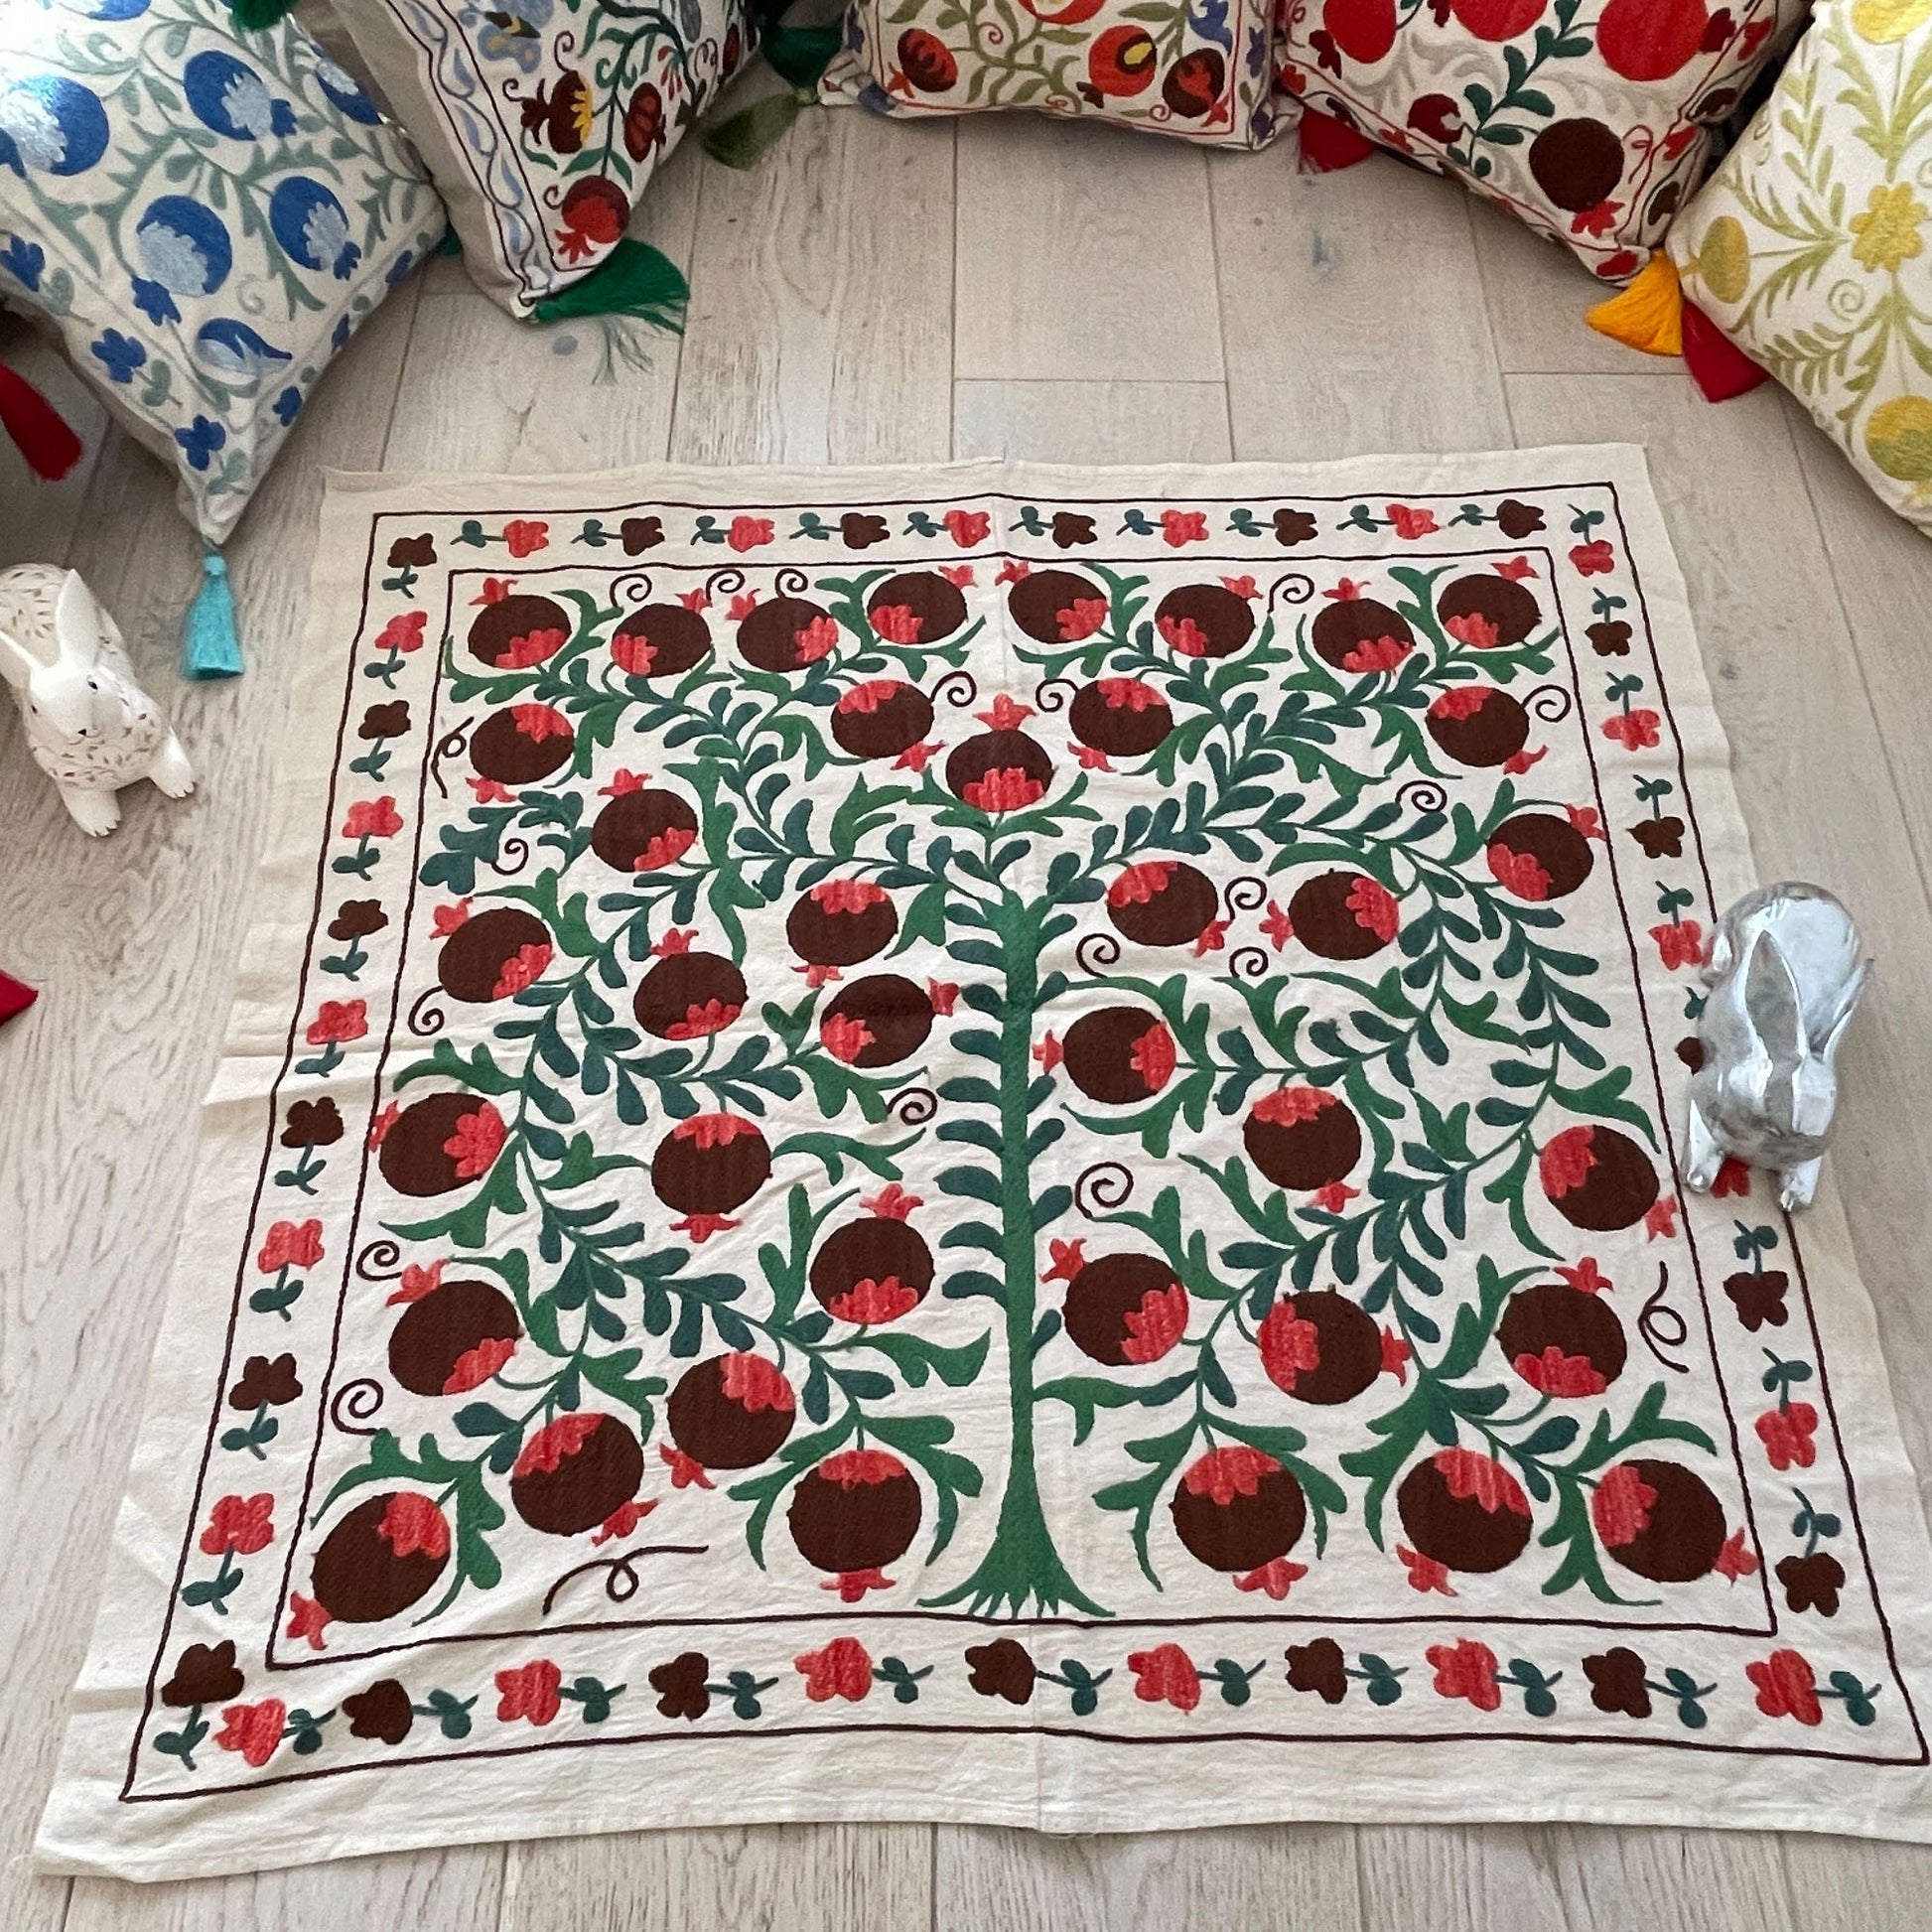 Uzbeki Suzani Hand Embroidered Textile Wall Hanging | Home Décor | Square | 100cm x 100cm SUZ0410005 - Wildash London